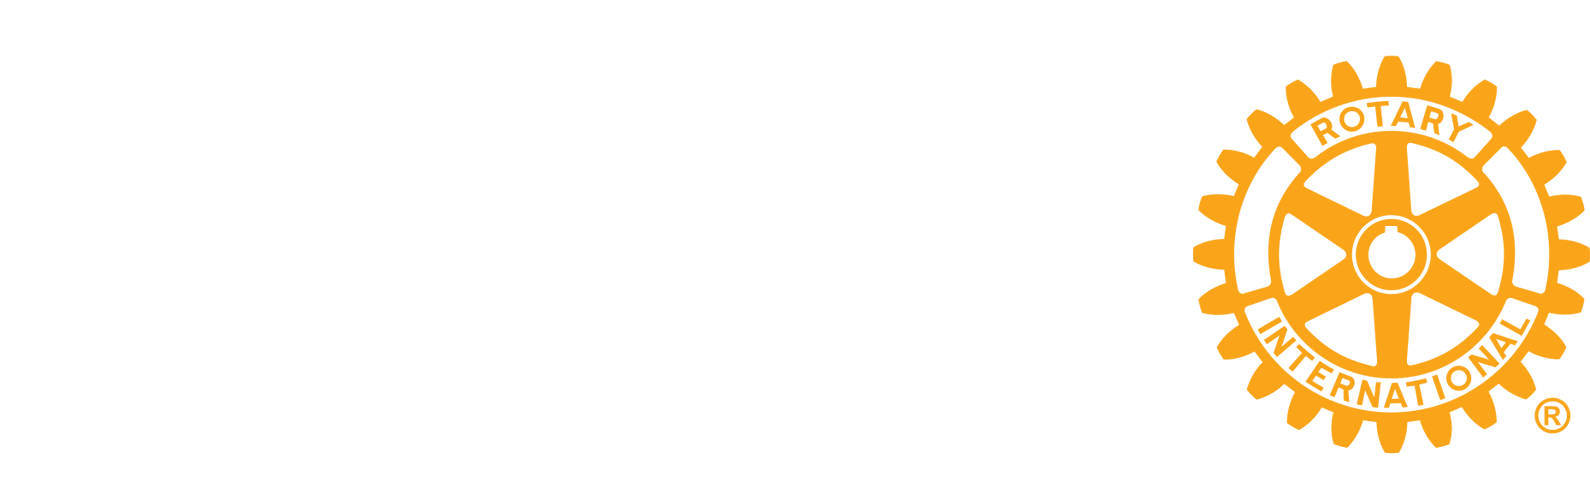 Go to Rotary Club of Oshkosh Southwest Home Page